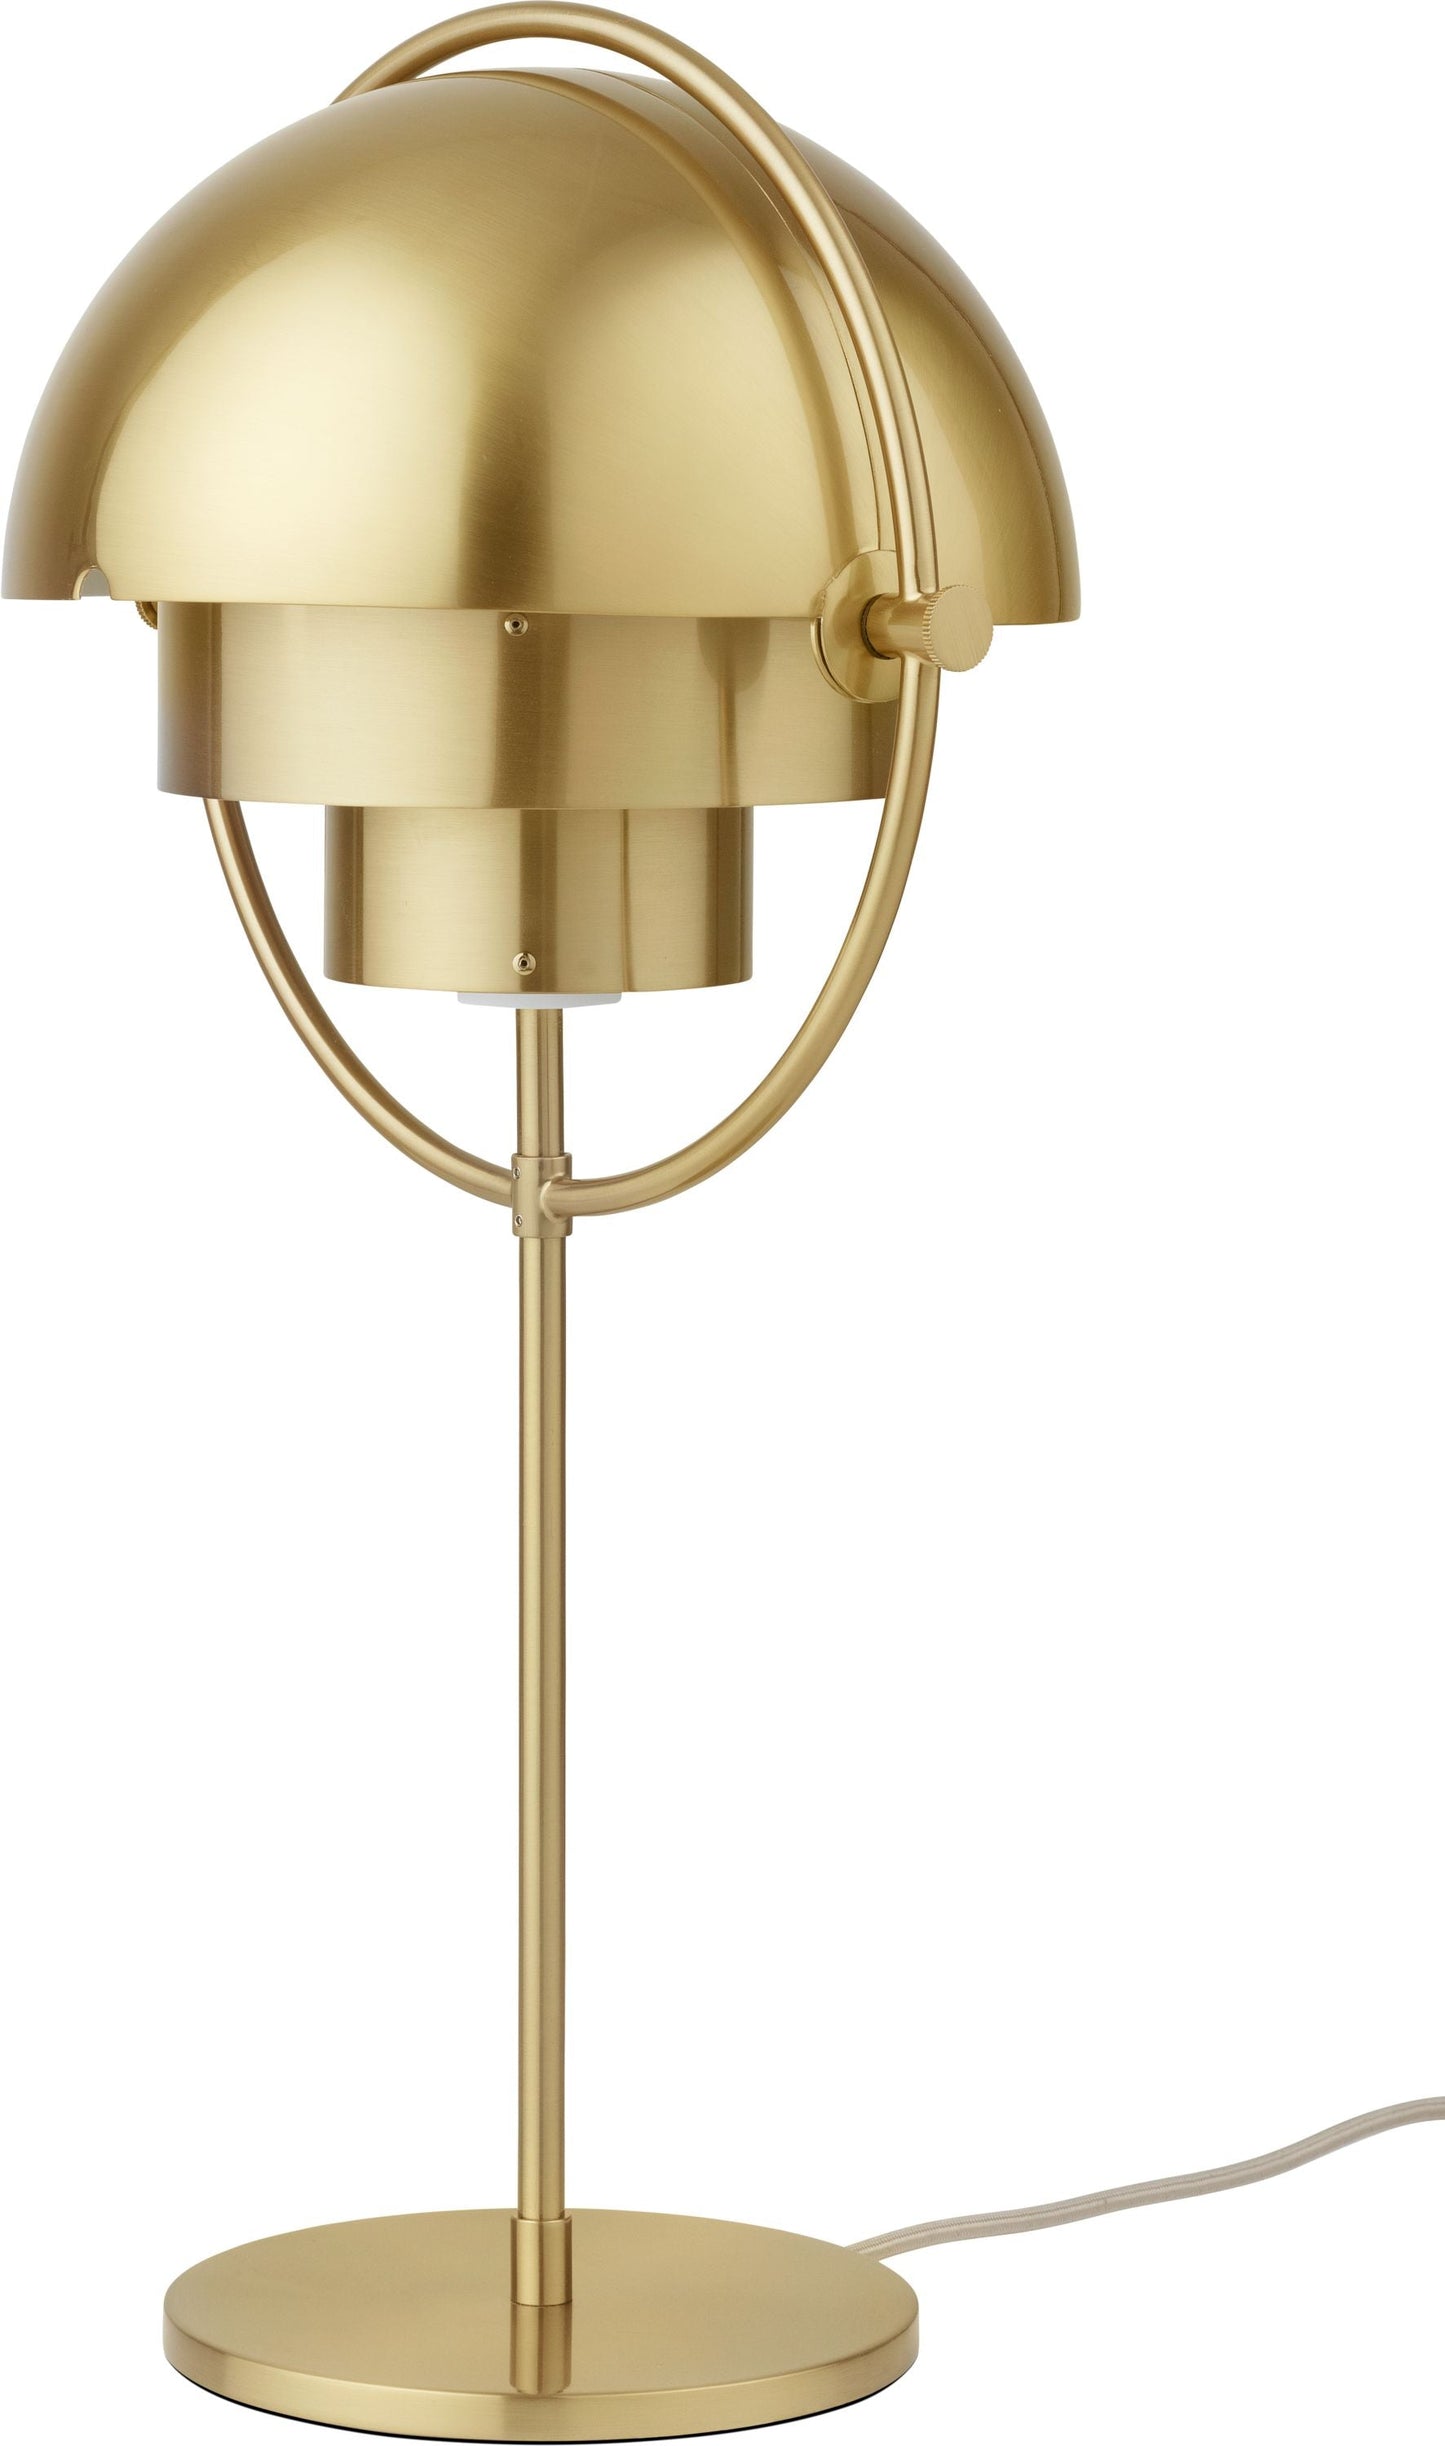 Multi-Lite Table Lampe, All brass